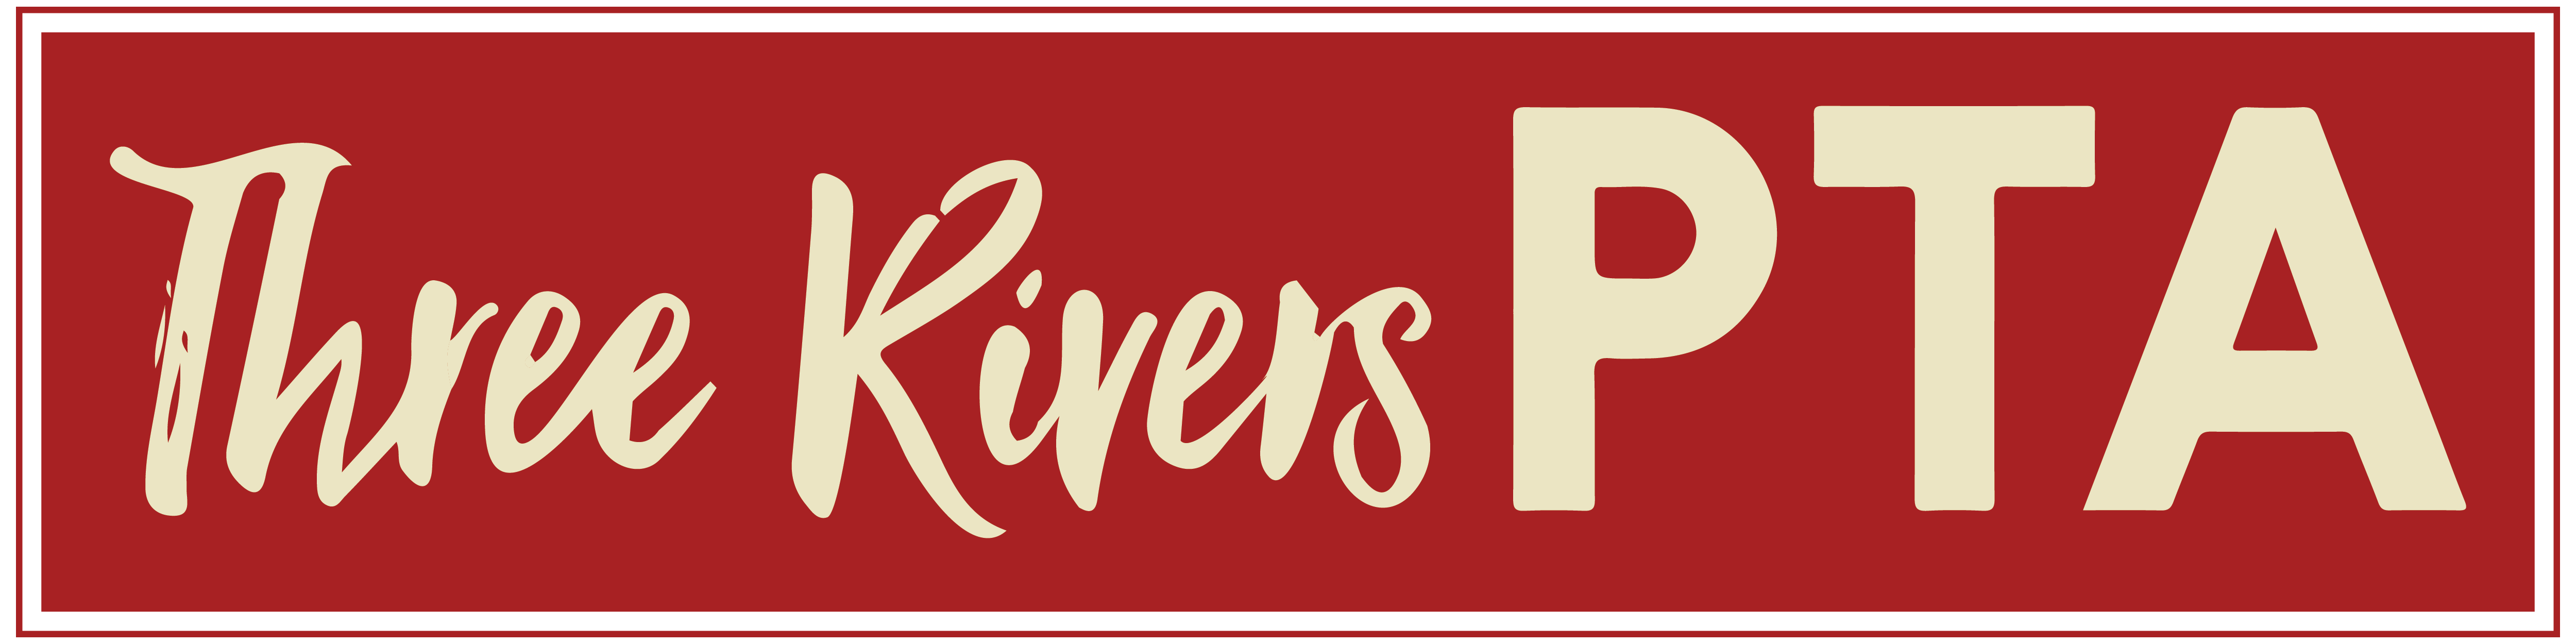 Three Rivers PTA logo